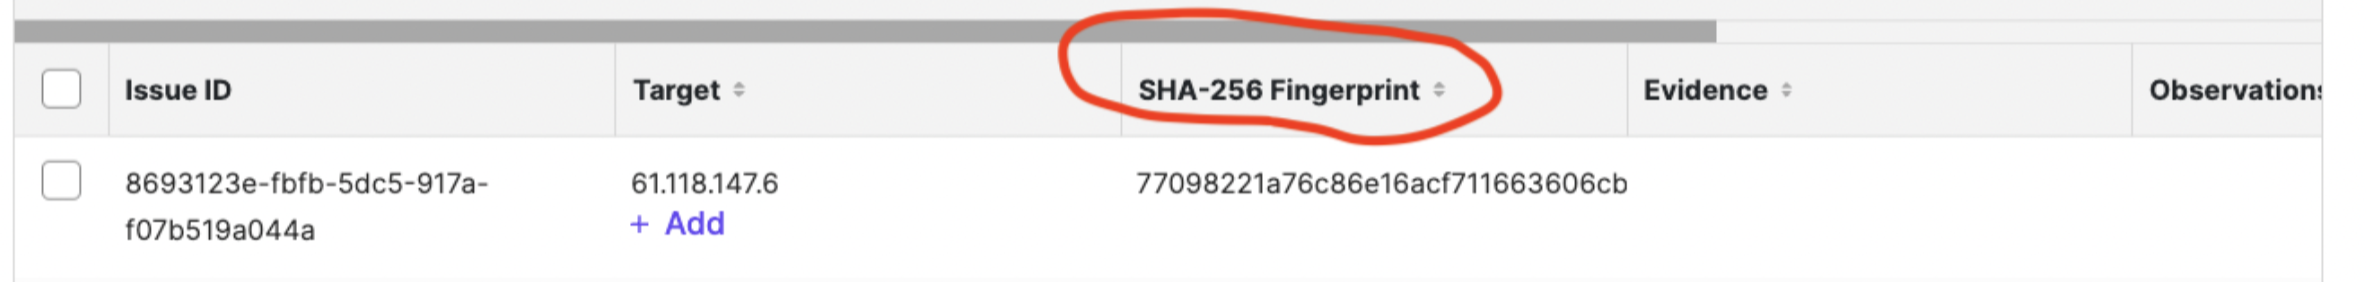 sha-256-fingerprint-column-heading.png